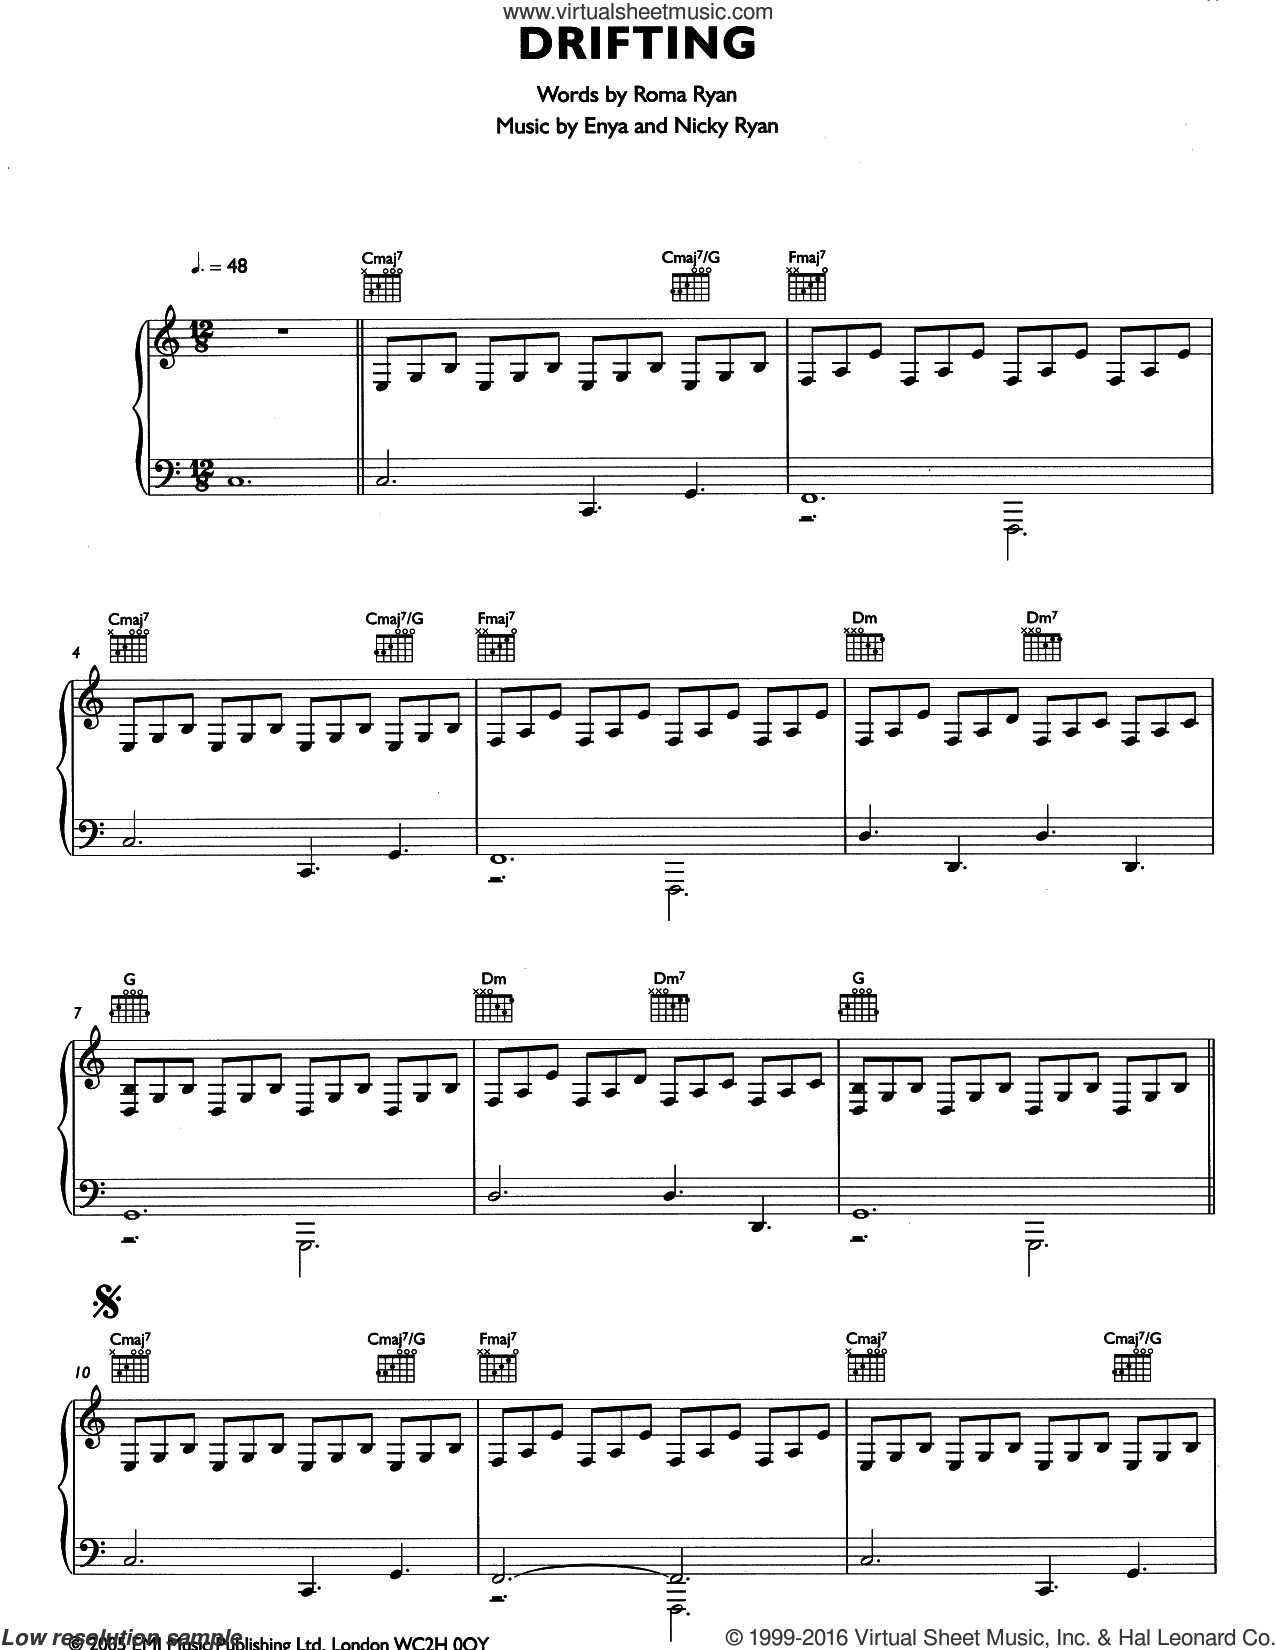 Enya - Drifting Sheet Music For Voice, Piano Or Guitar [PDF]